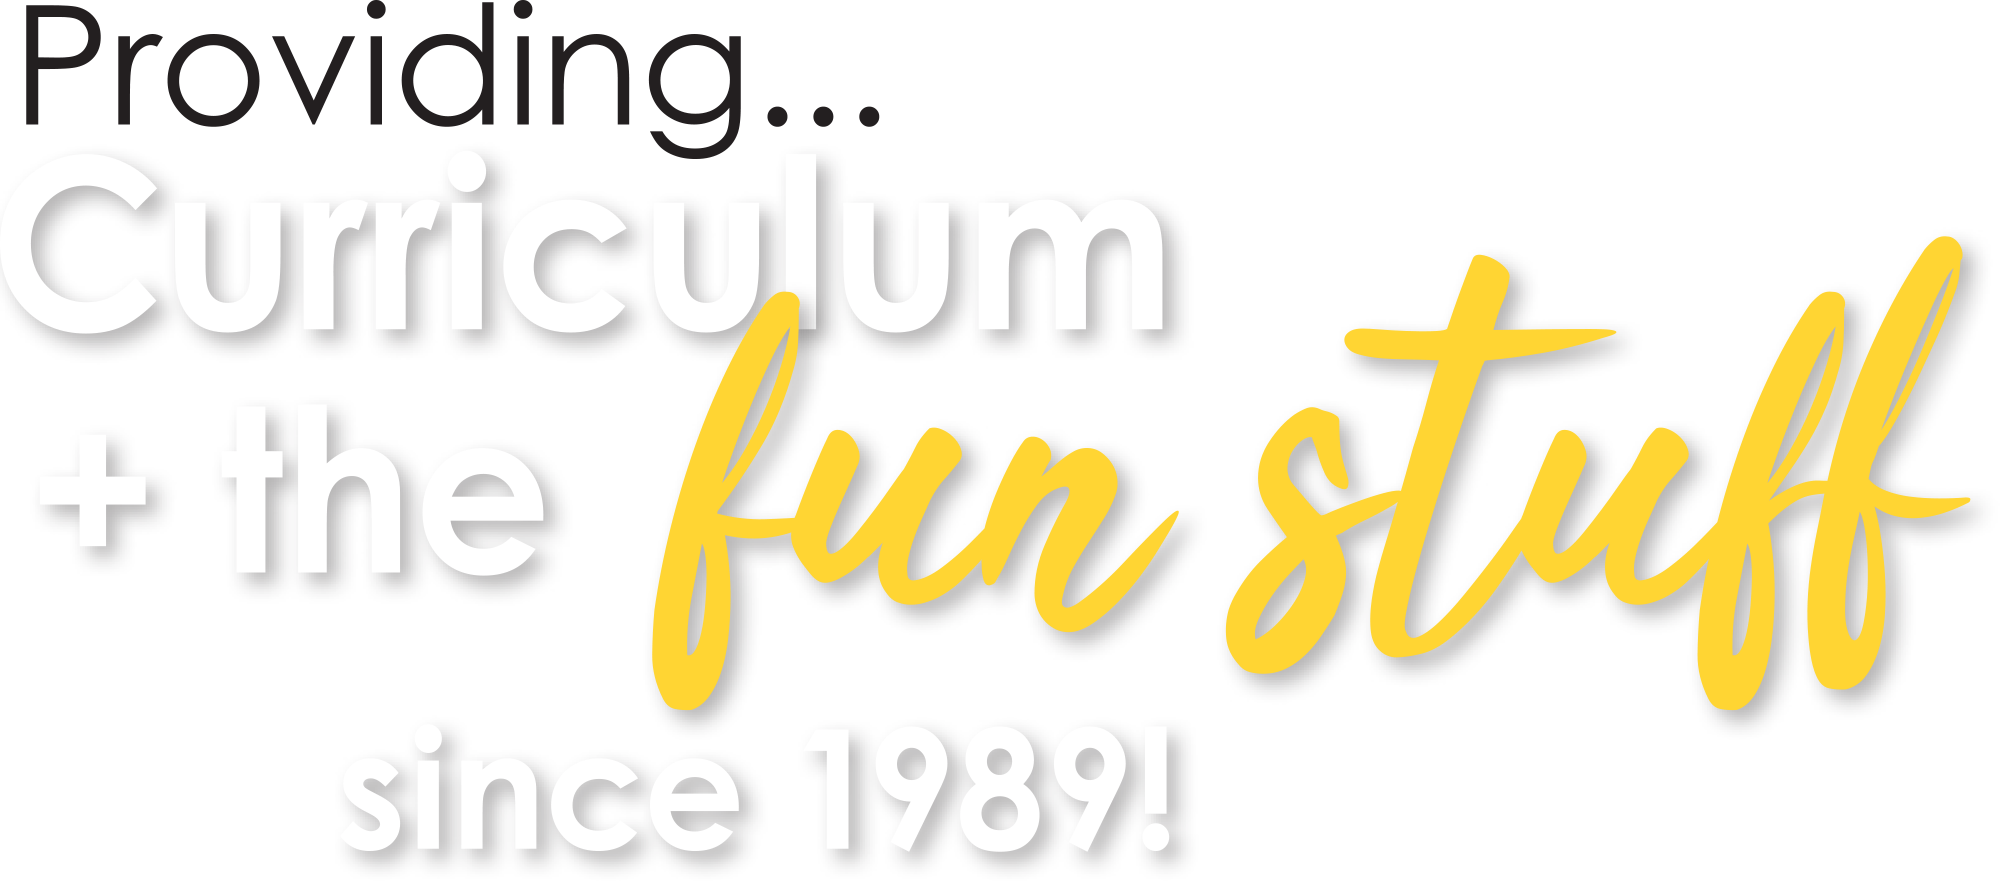 Providing... Curriculum + the fun stuff since 1989! typography